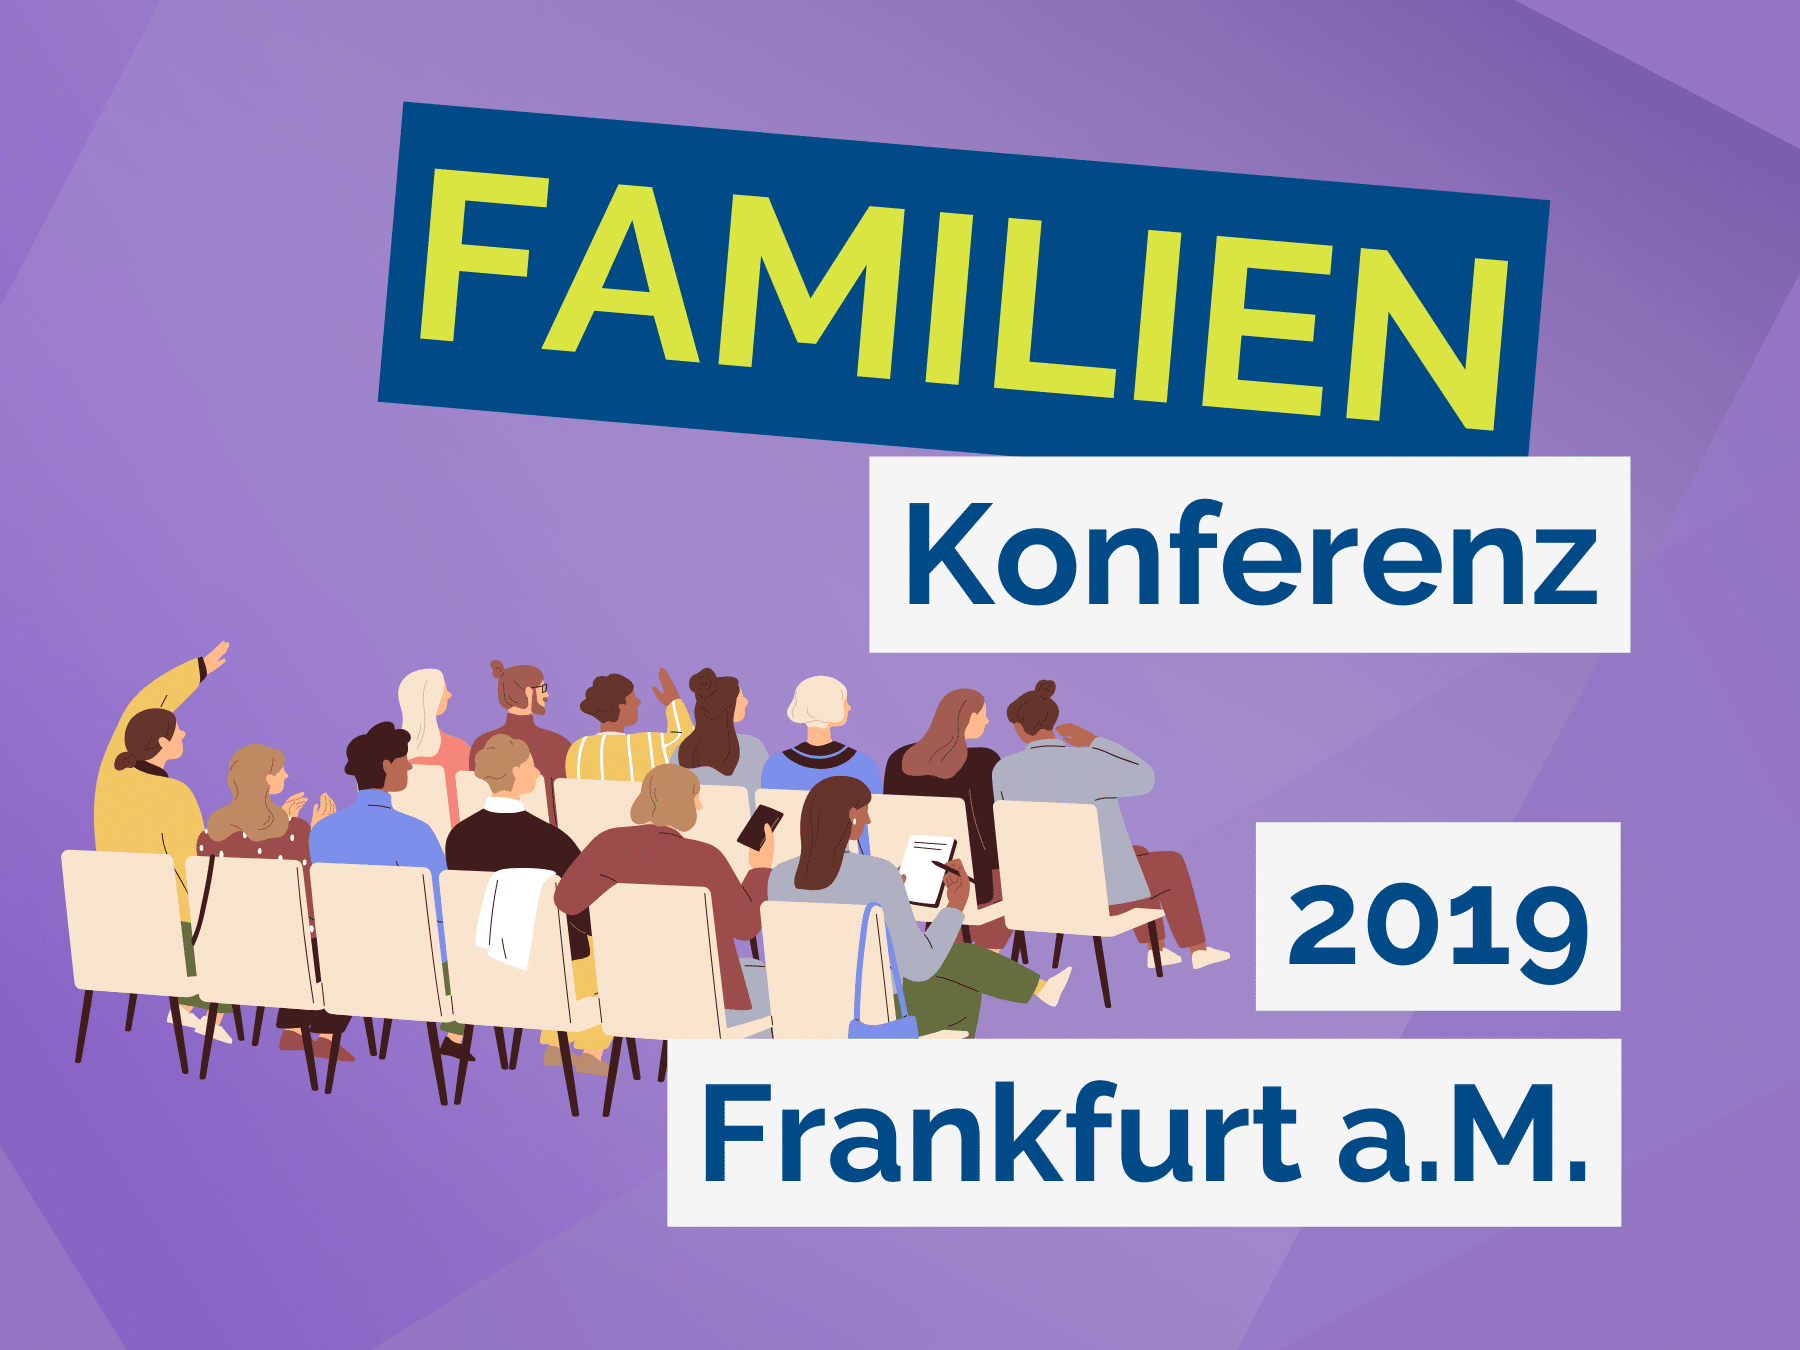 Familienkonferenz Frankfurt 2019